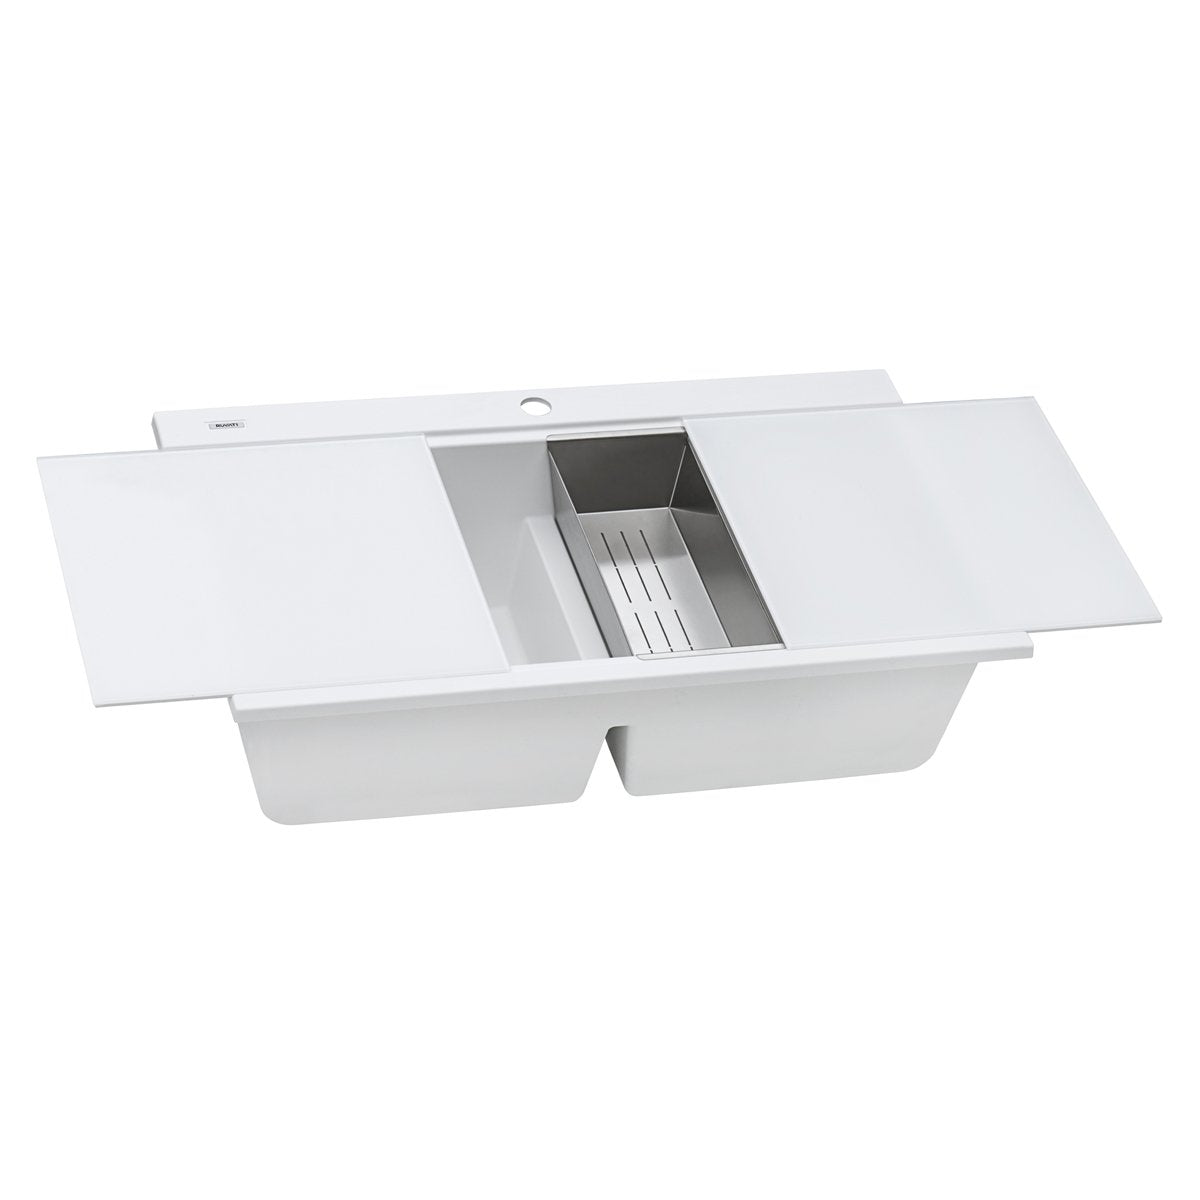 Ruvati 34" Topmount Granite Composite Workstation Kitchen Sink in White RVG1350WH